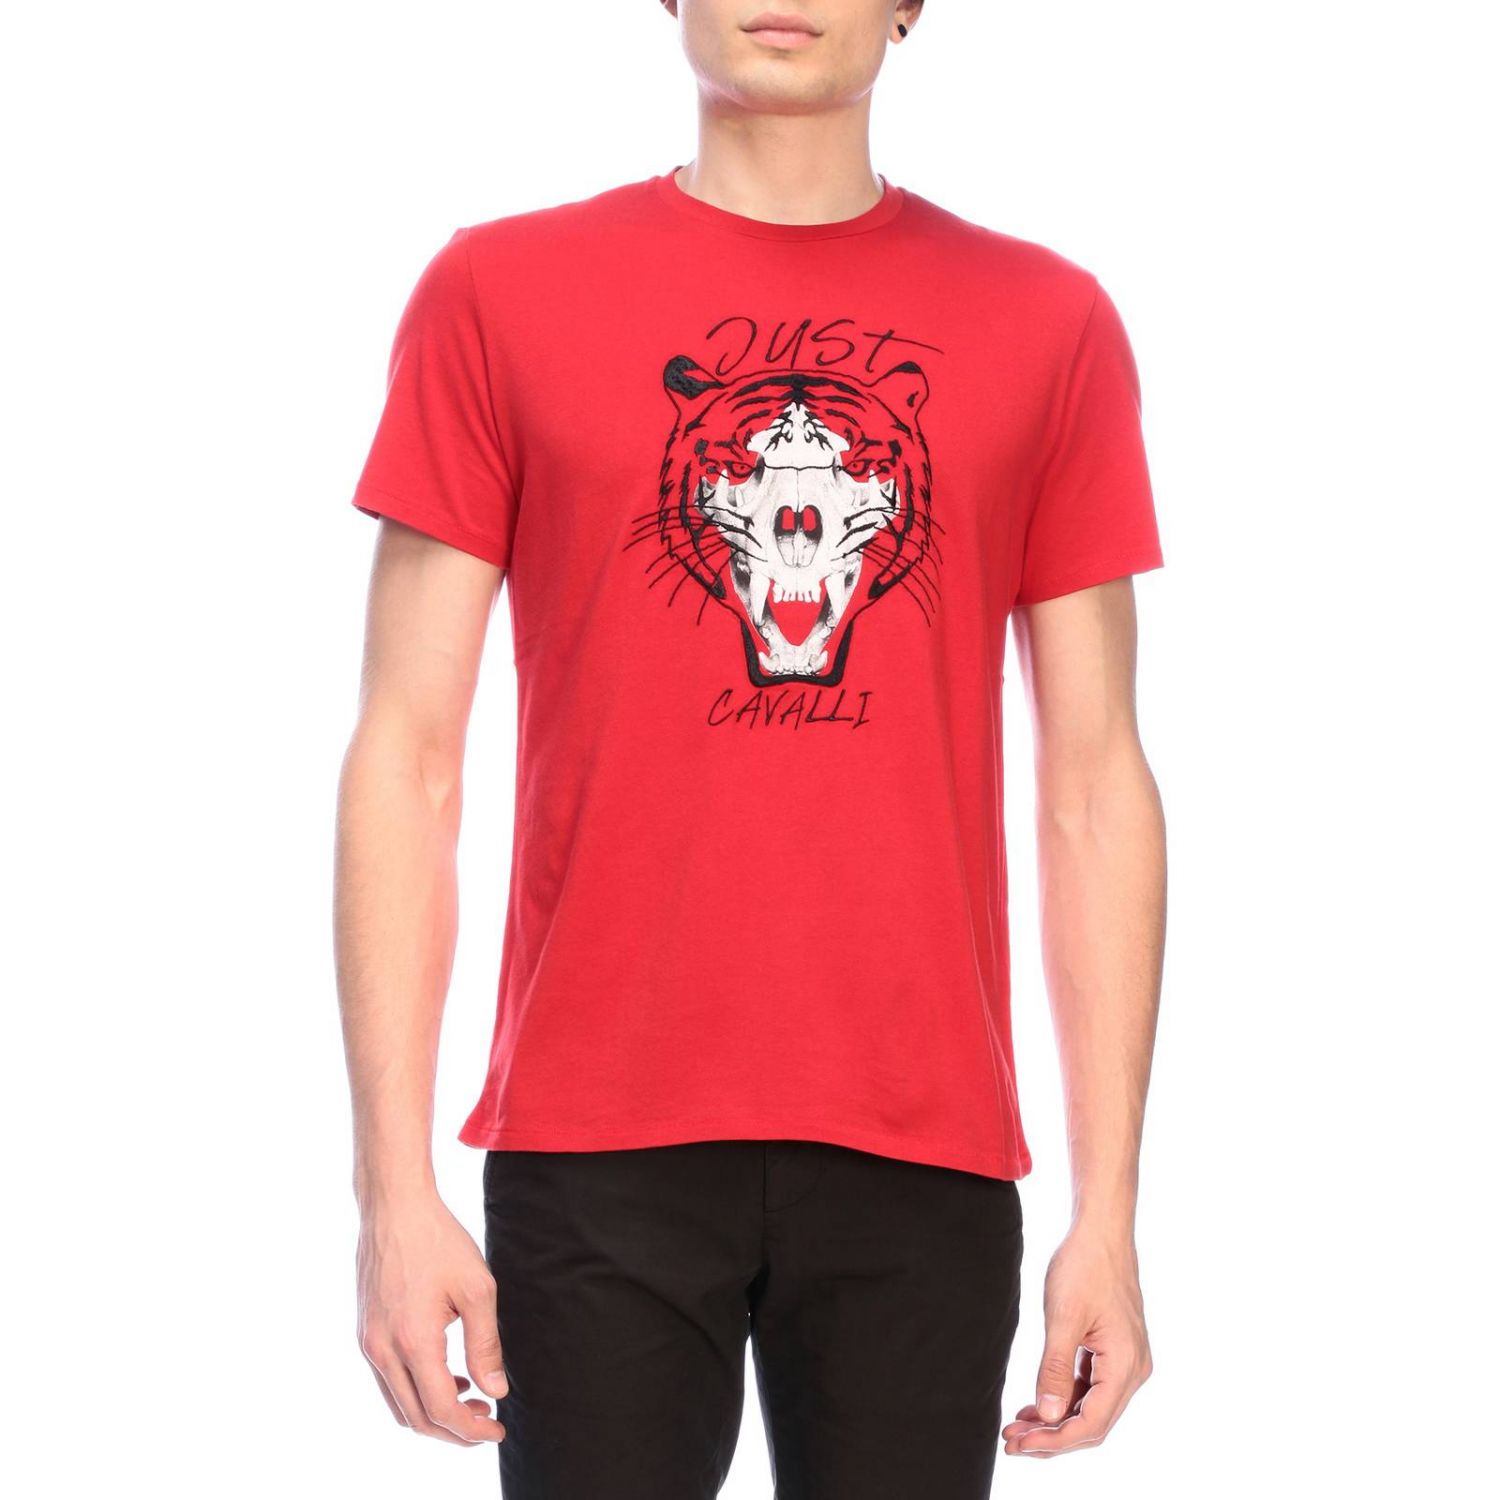 Just Cavalli Outlet: T-shirt men | T-Shirt Just Cavalli Men Red | T ...